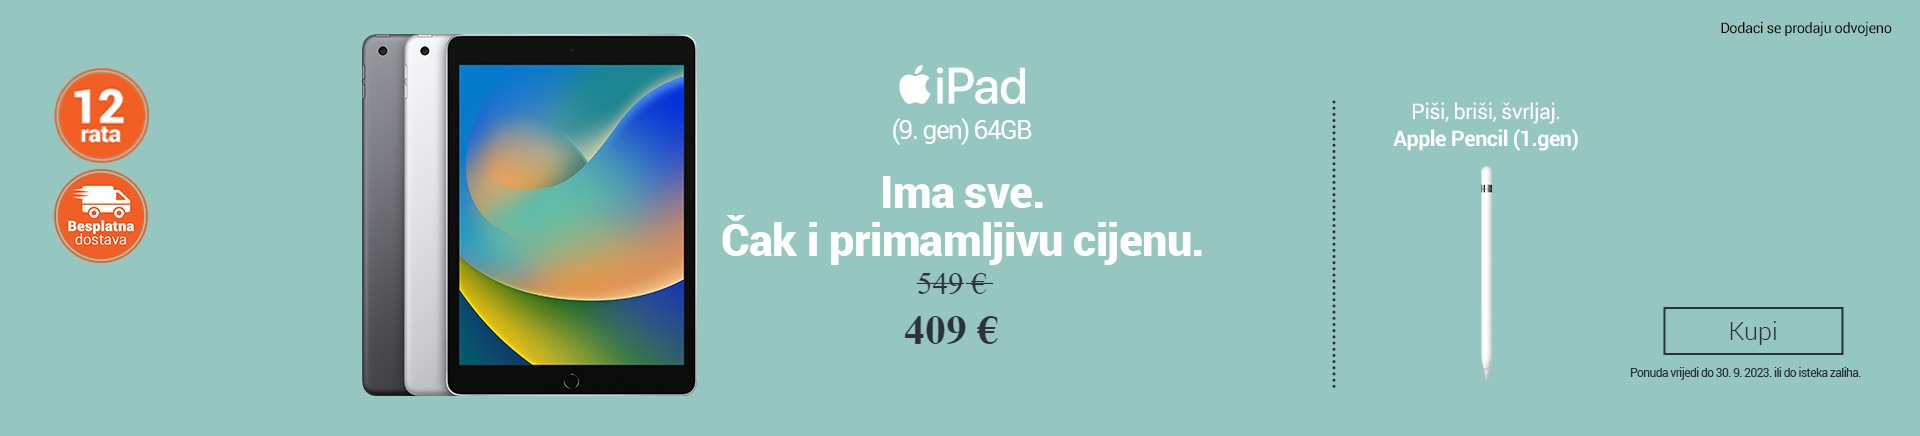 BA-APPLE-iPad9-64GB-Olovka-MOBILE-380-X-436.jpg